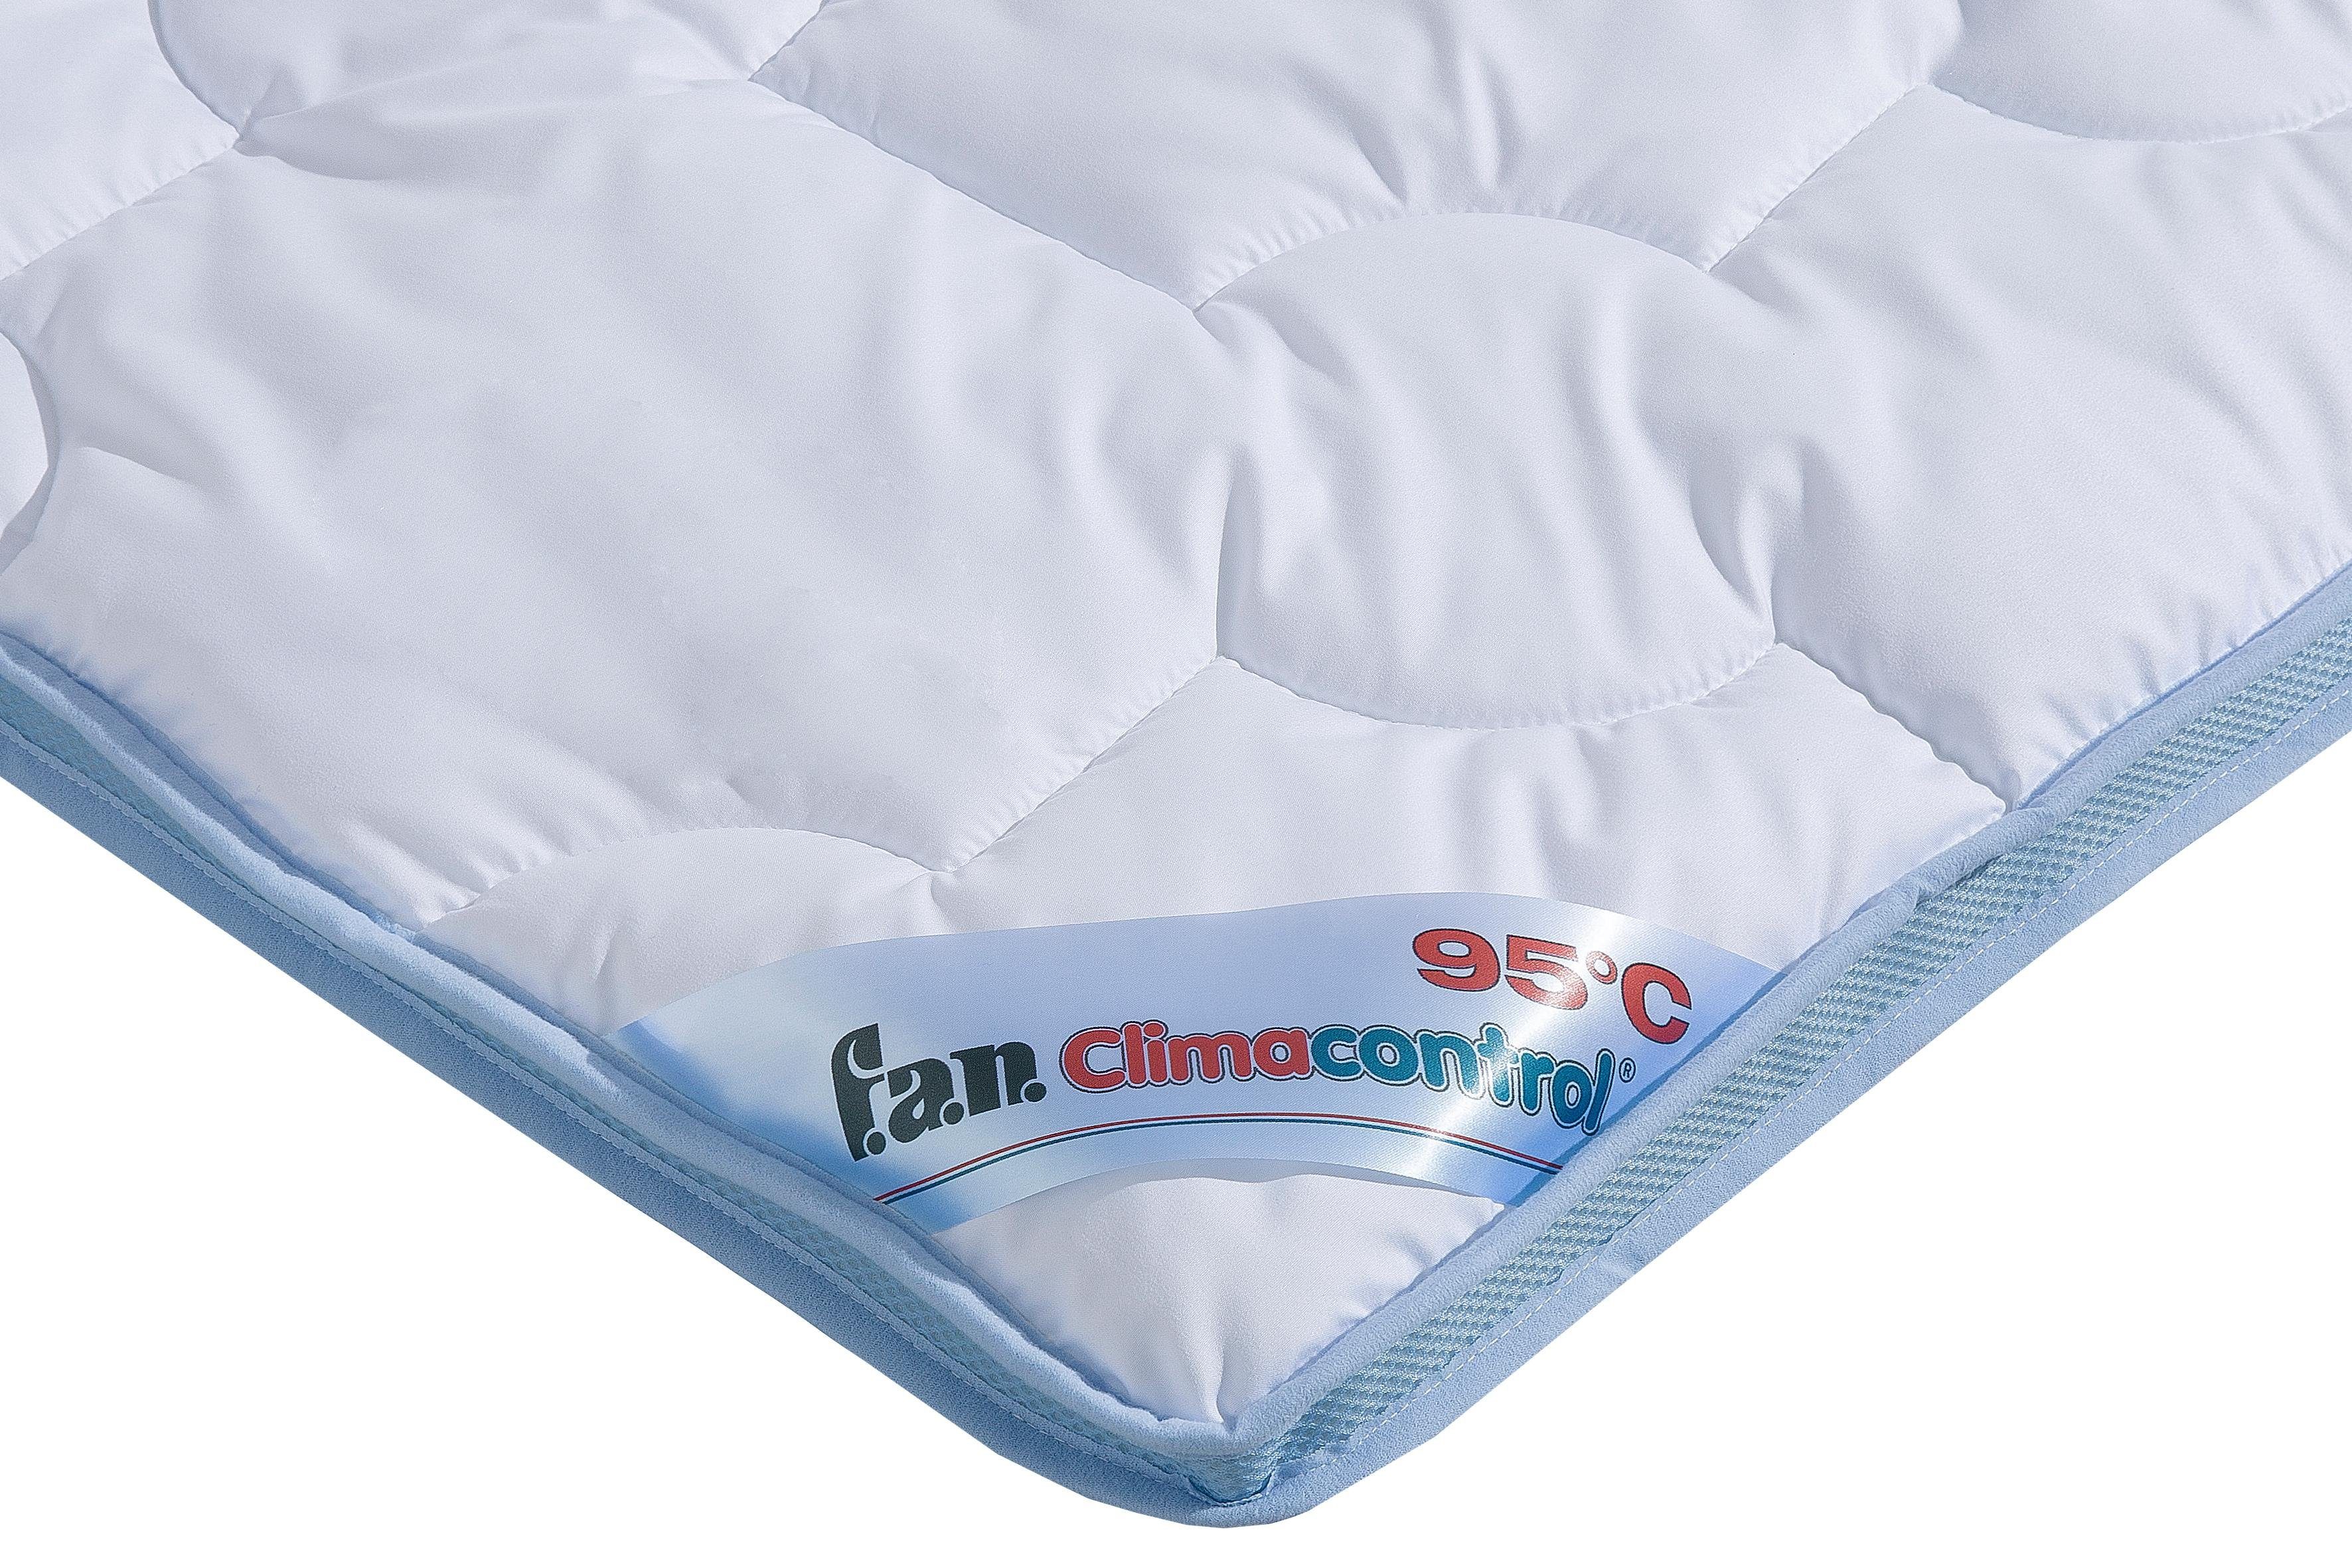 Microfaserbettdecke, Climacontrol®, f.a.n. optimierte durch Klimafunktion Schlafkomfort, Lüftungsband